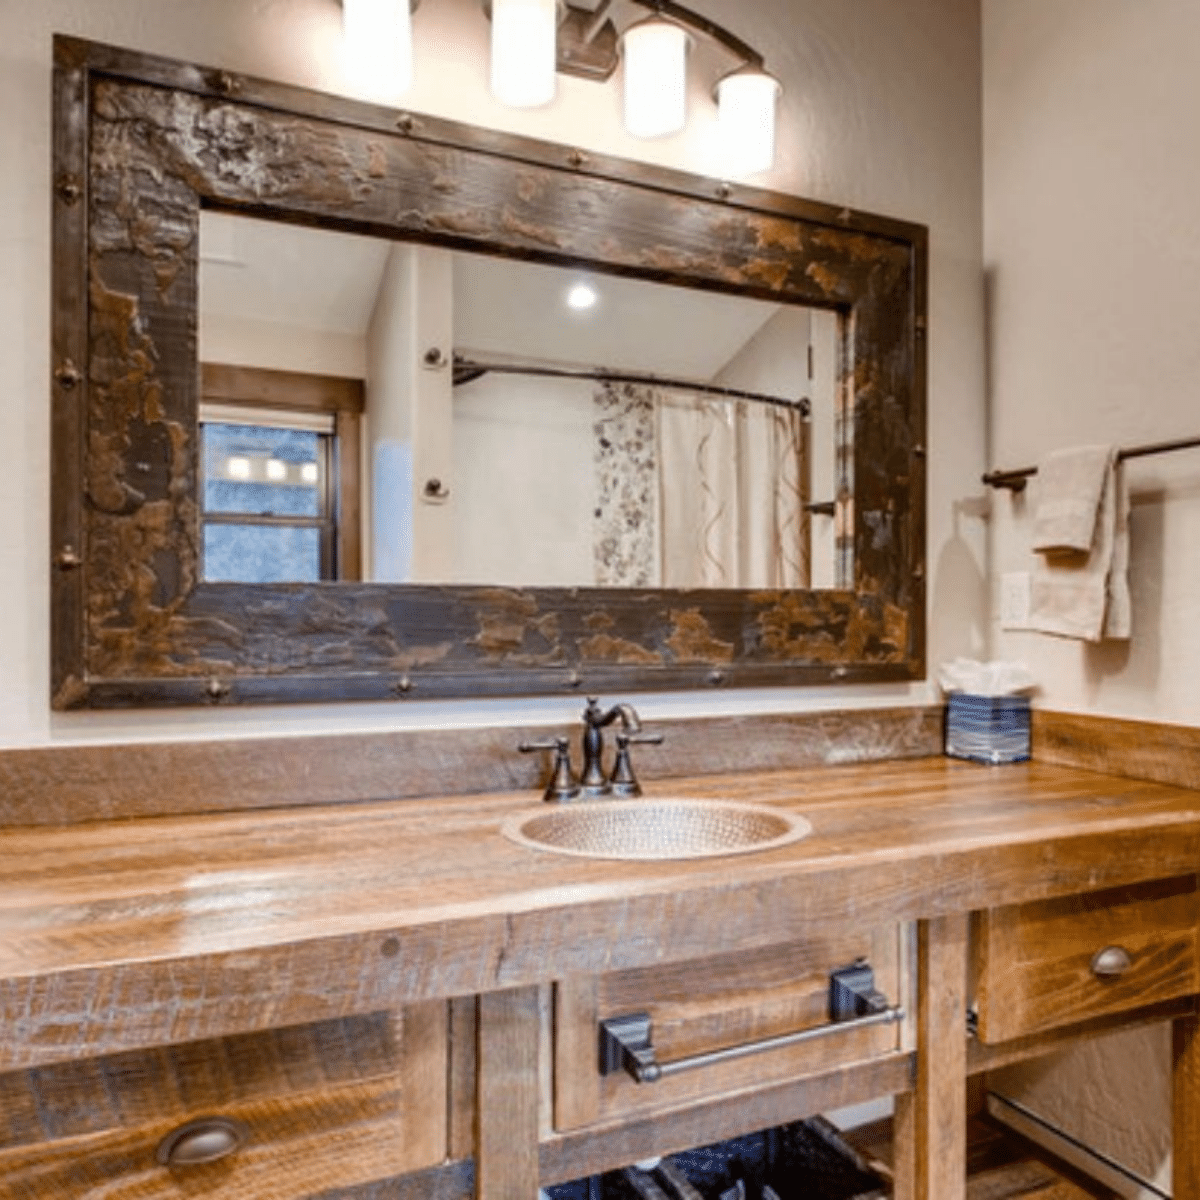 Transform Your Bath Space with Rustic Cabin Lodge Bathroom Decor